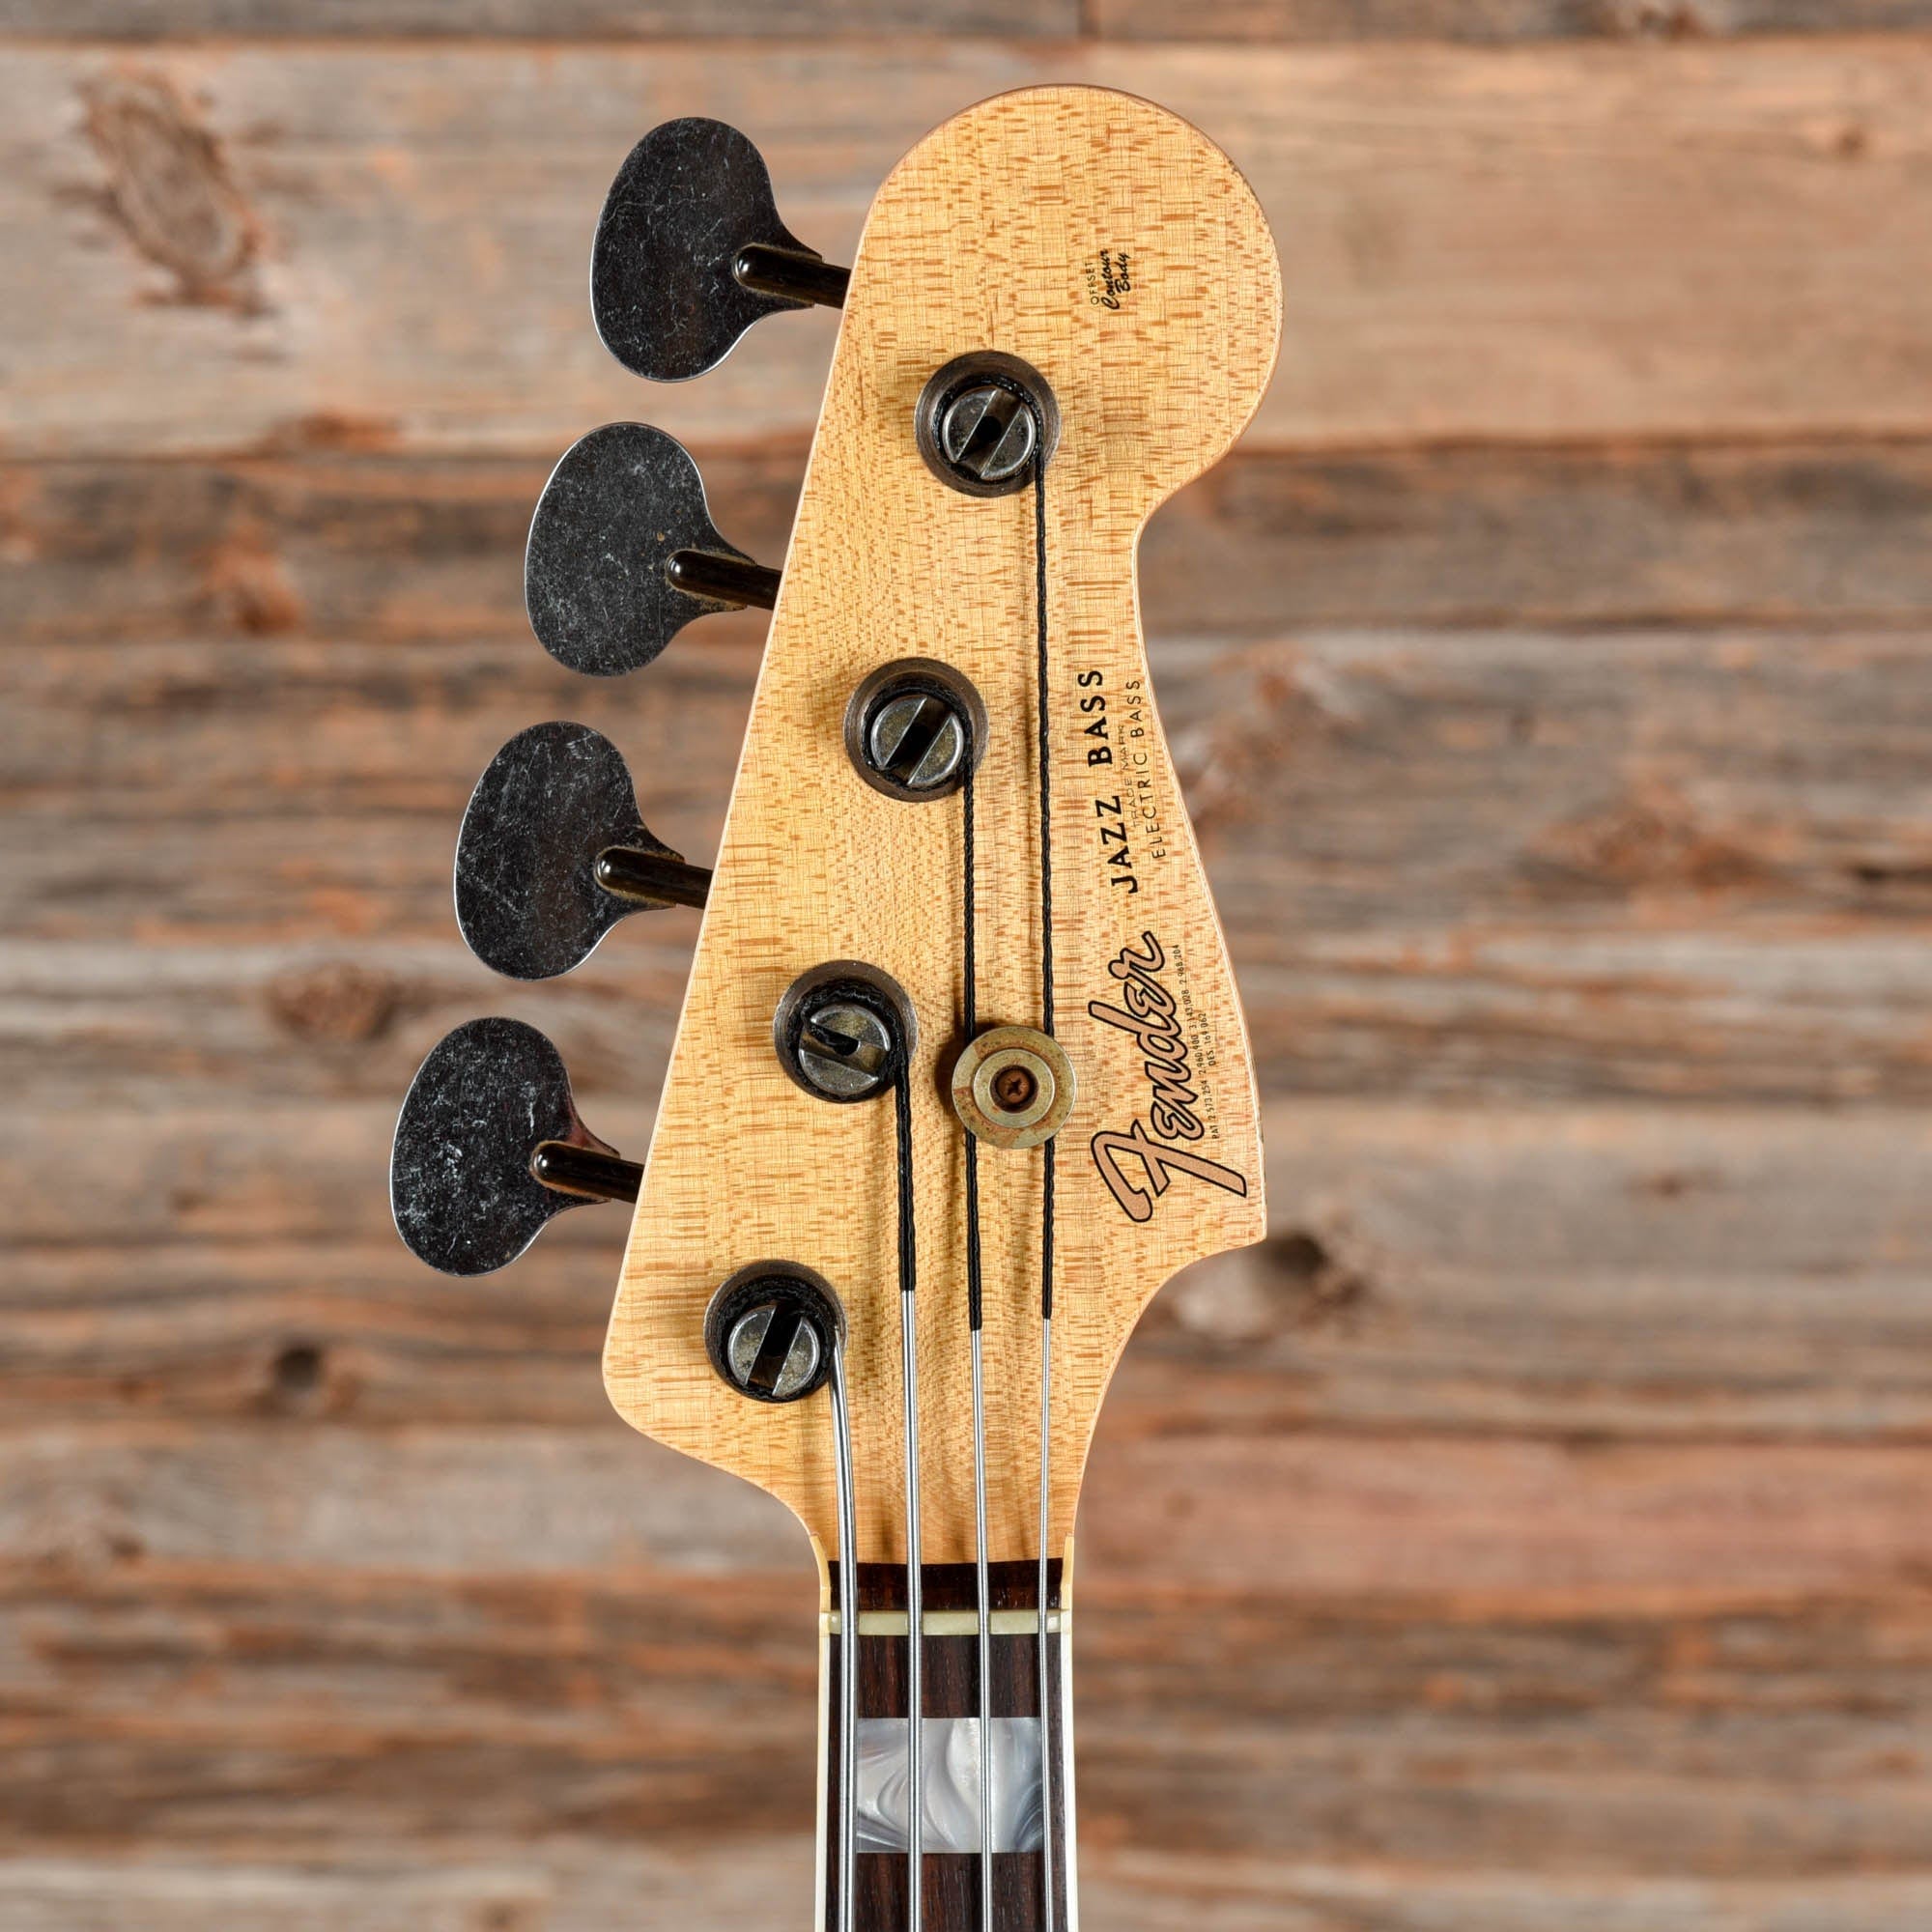 Fender Custom Shop Limited Edition PJ Bass Journeyman Relic Sunburst 2021 Bass Guitars / 4-String